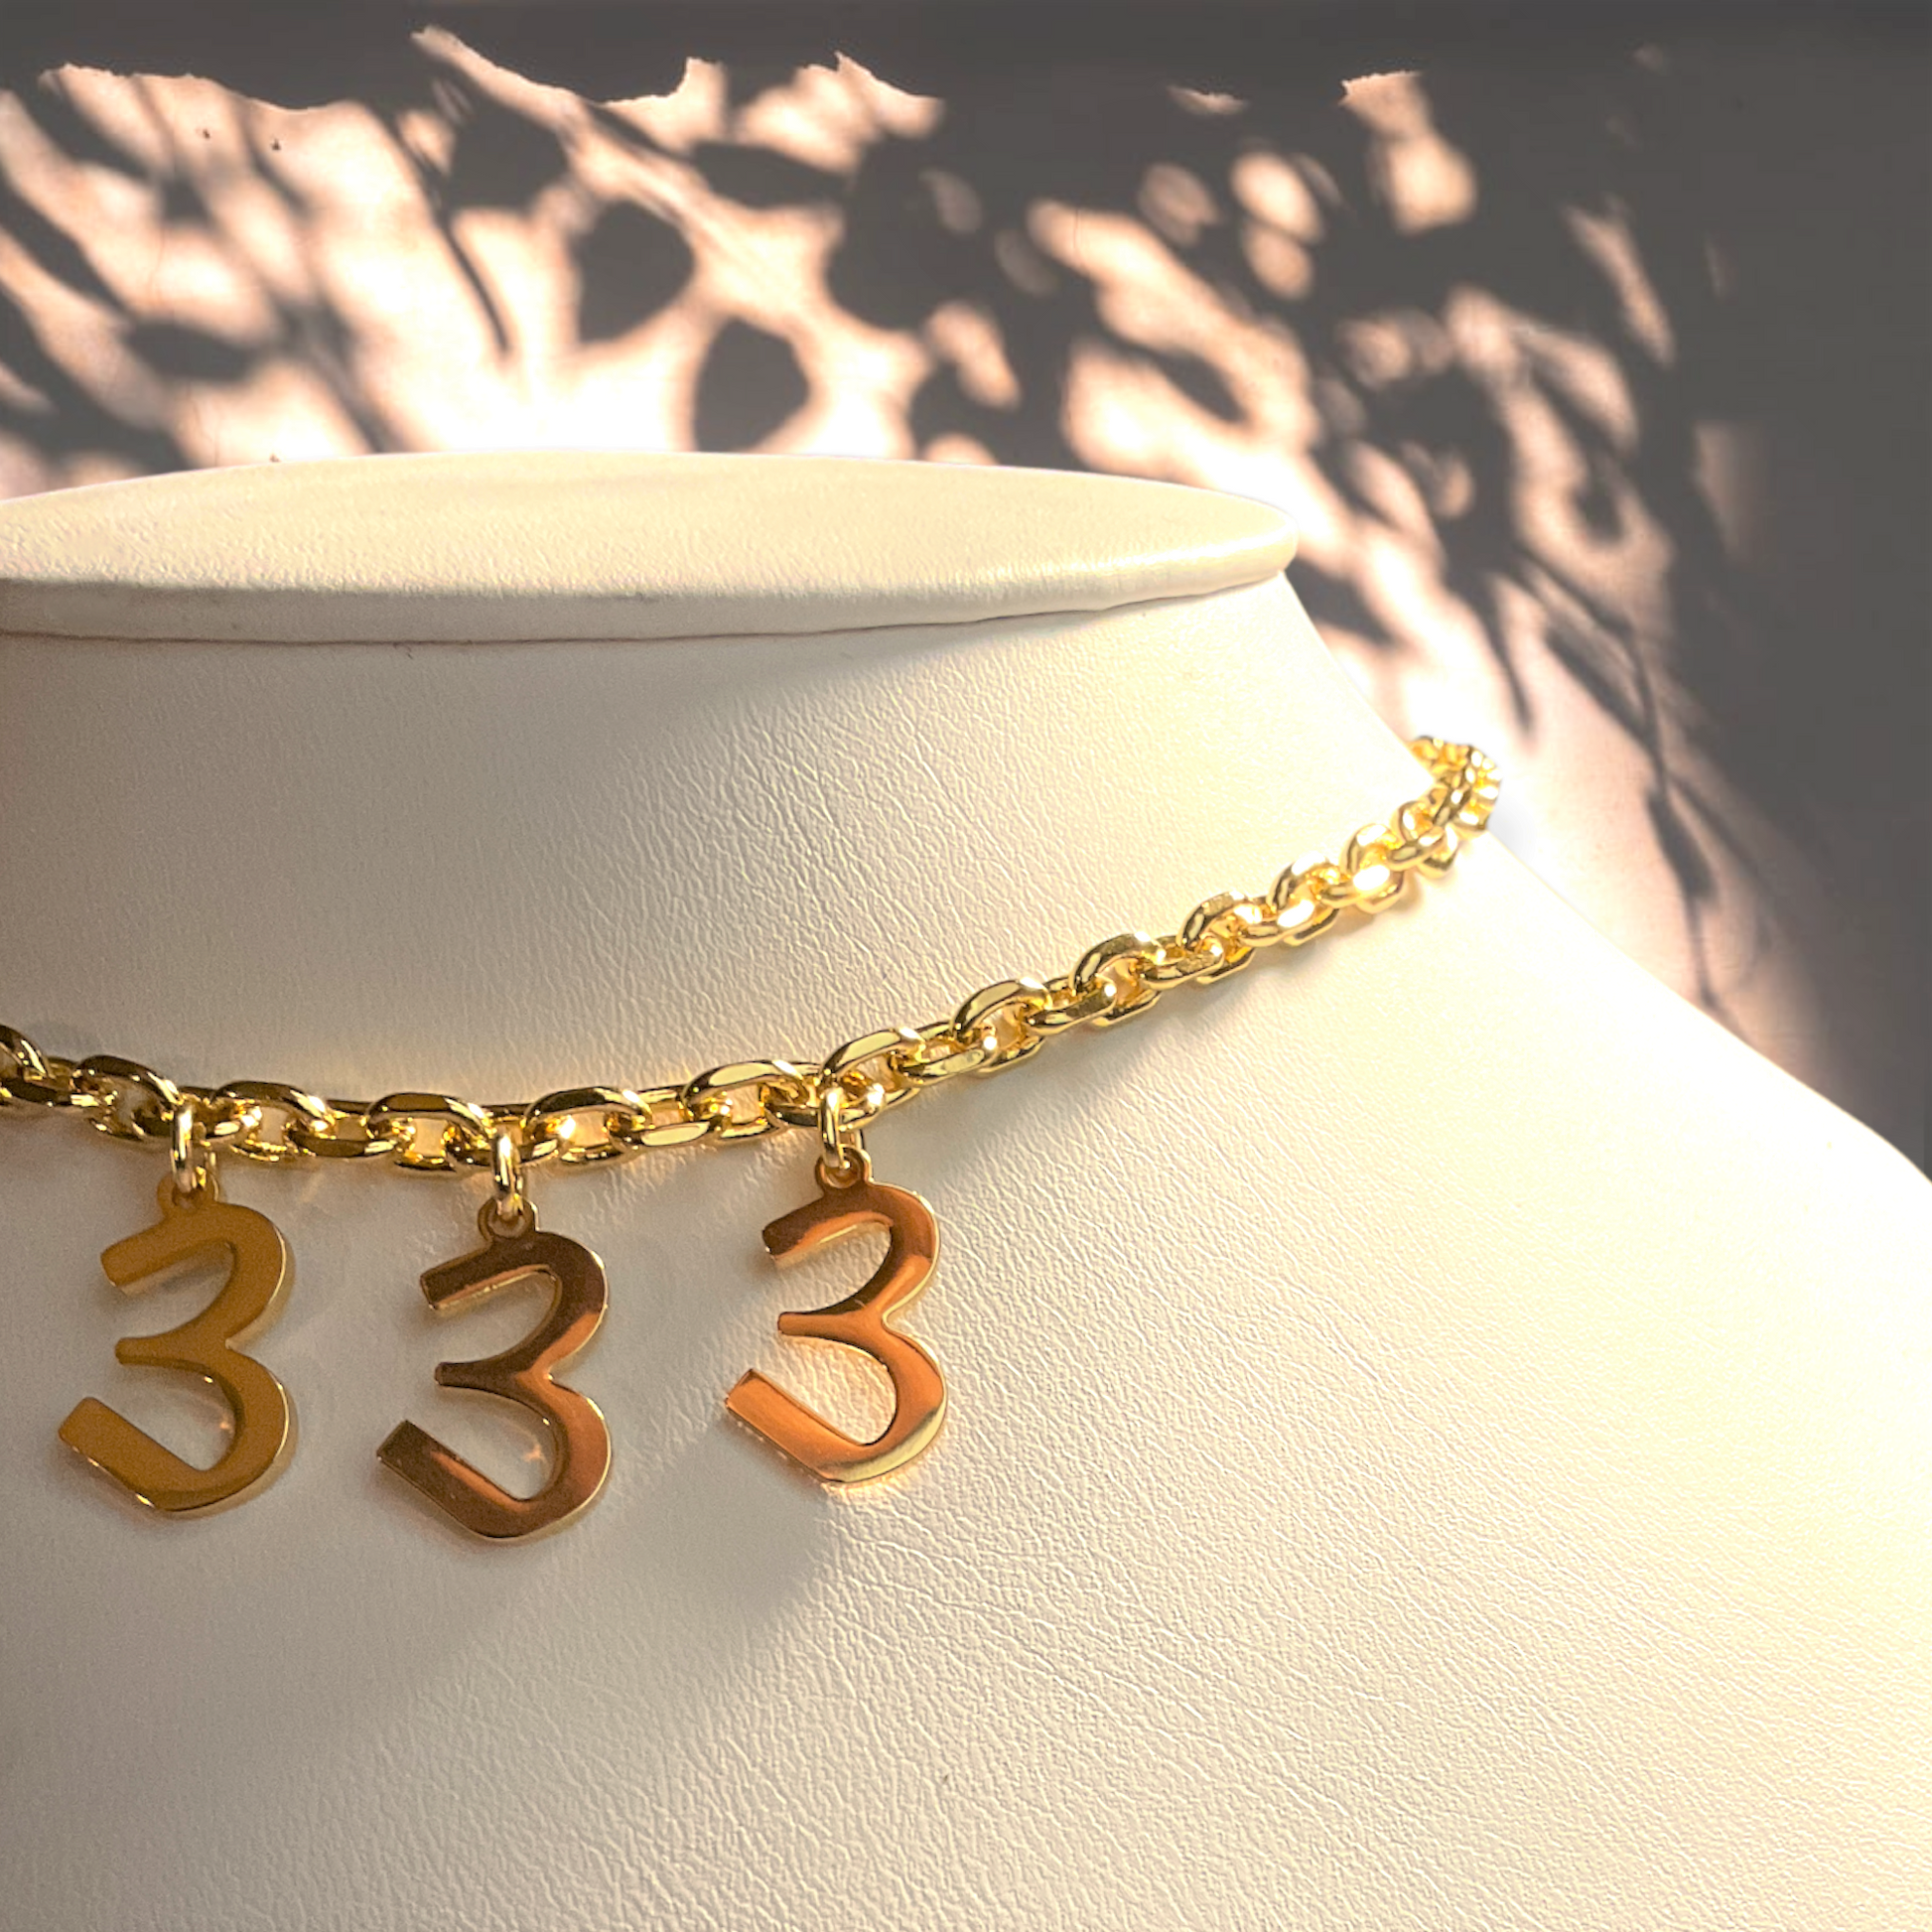 333 Angel number necklace with 18k gold plating, 18k gold plated necklace, angel number necklace gold, gold 333 angel number necklace, angel number jewelry, 333 necklace 